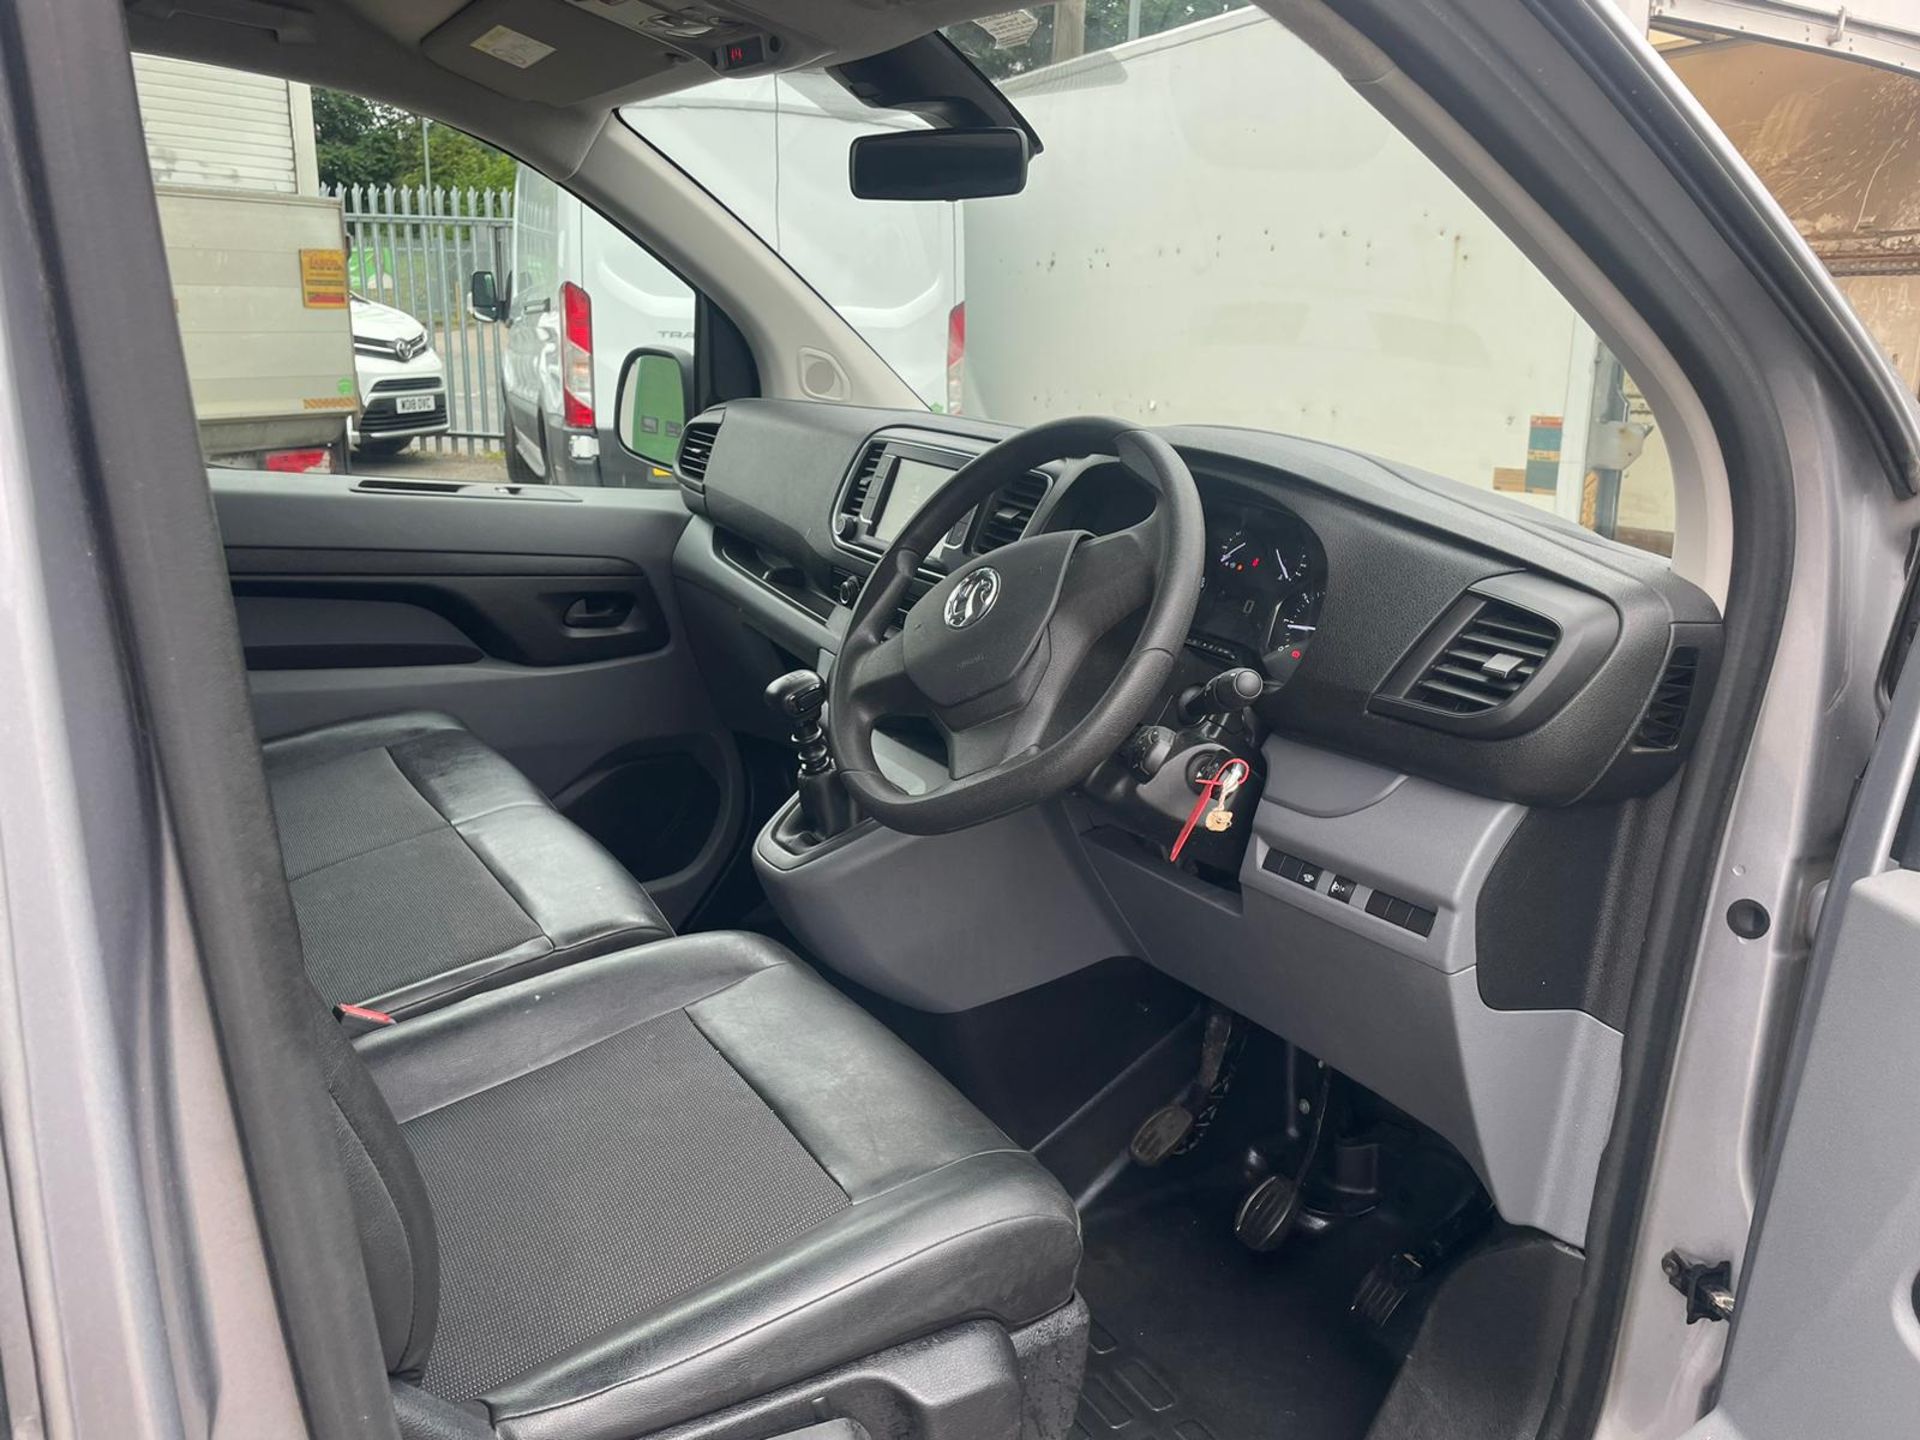 2019 60 Vauxhall vivaro 3100 sportive s/s Panel van - Euro 6 - LWB L2 - 41,234 warranted miles. - Image 6 of 9